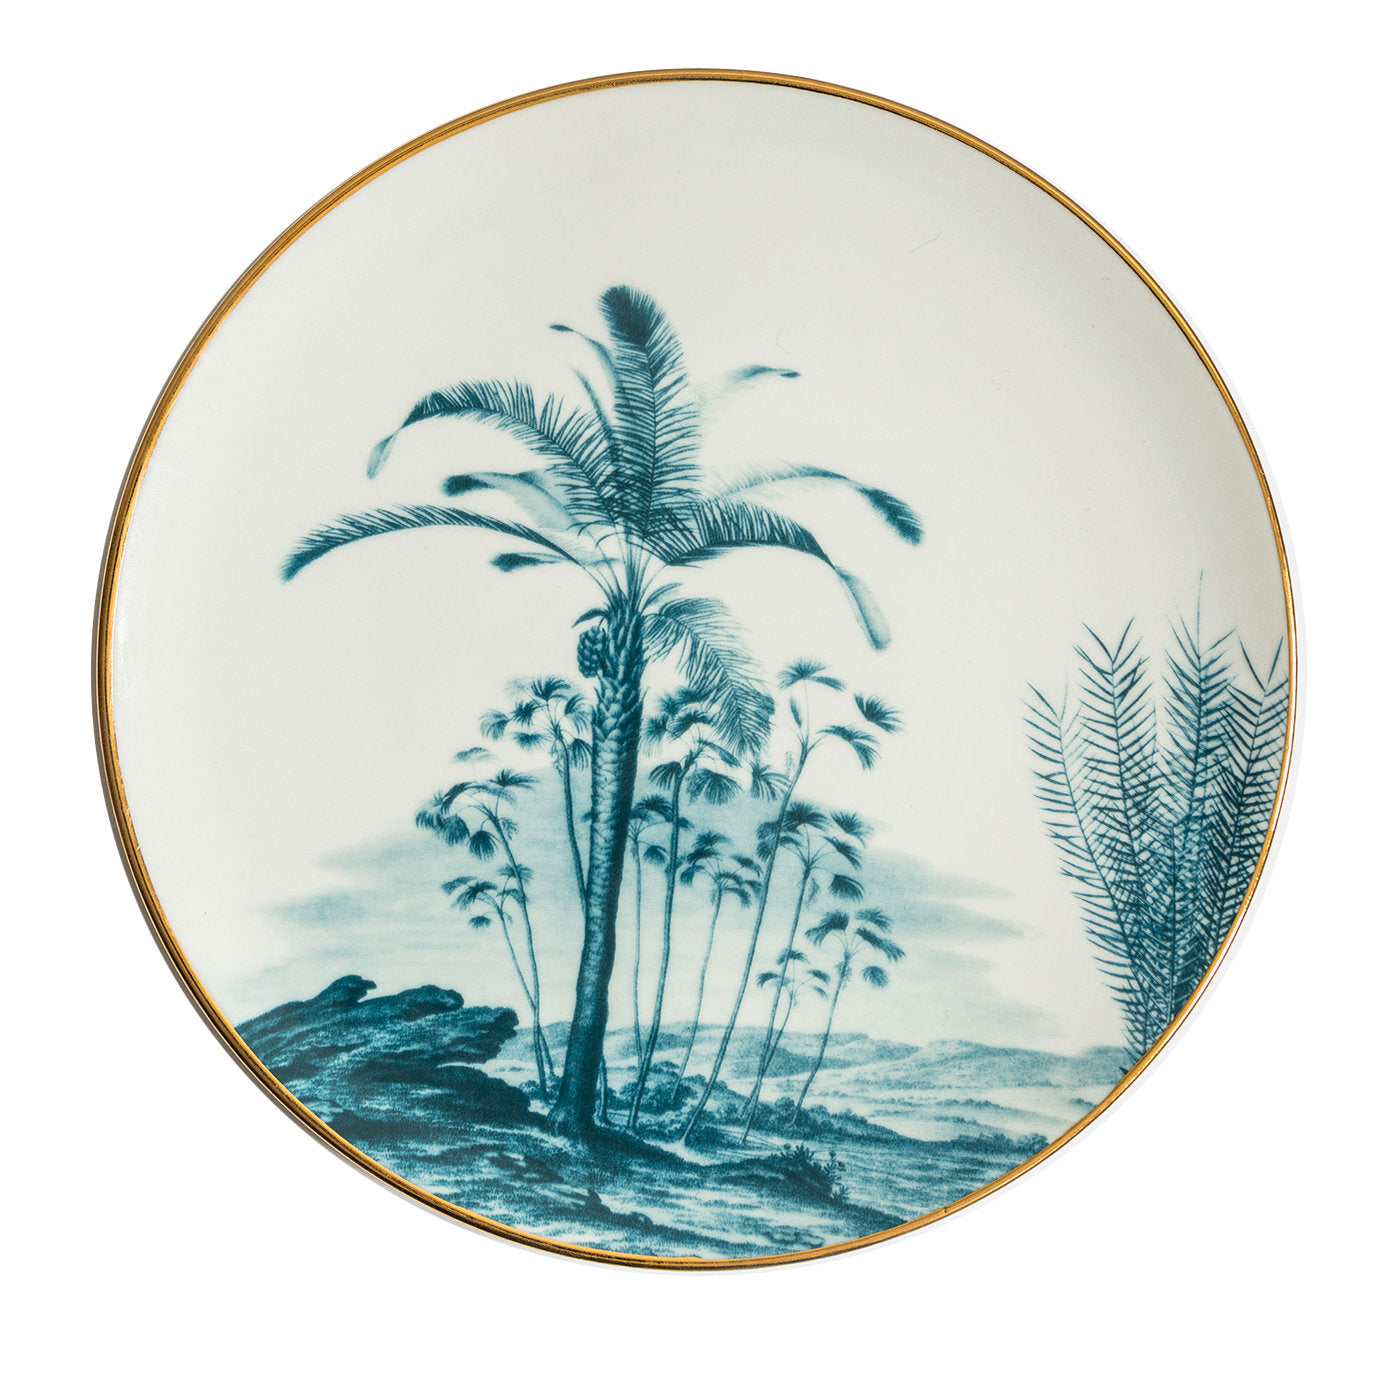 Las Palmas Plato de Porcelana con Azul Tropical Lendscape #2 - Vista principal